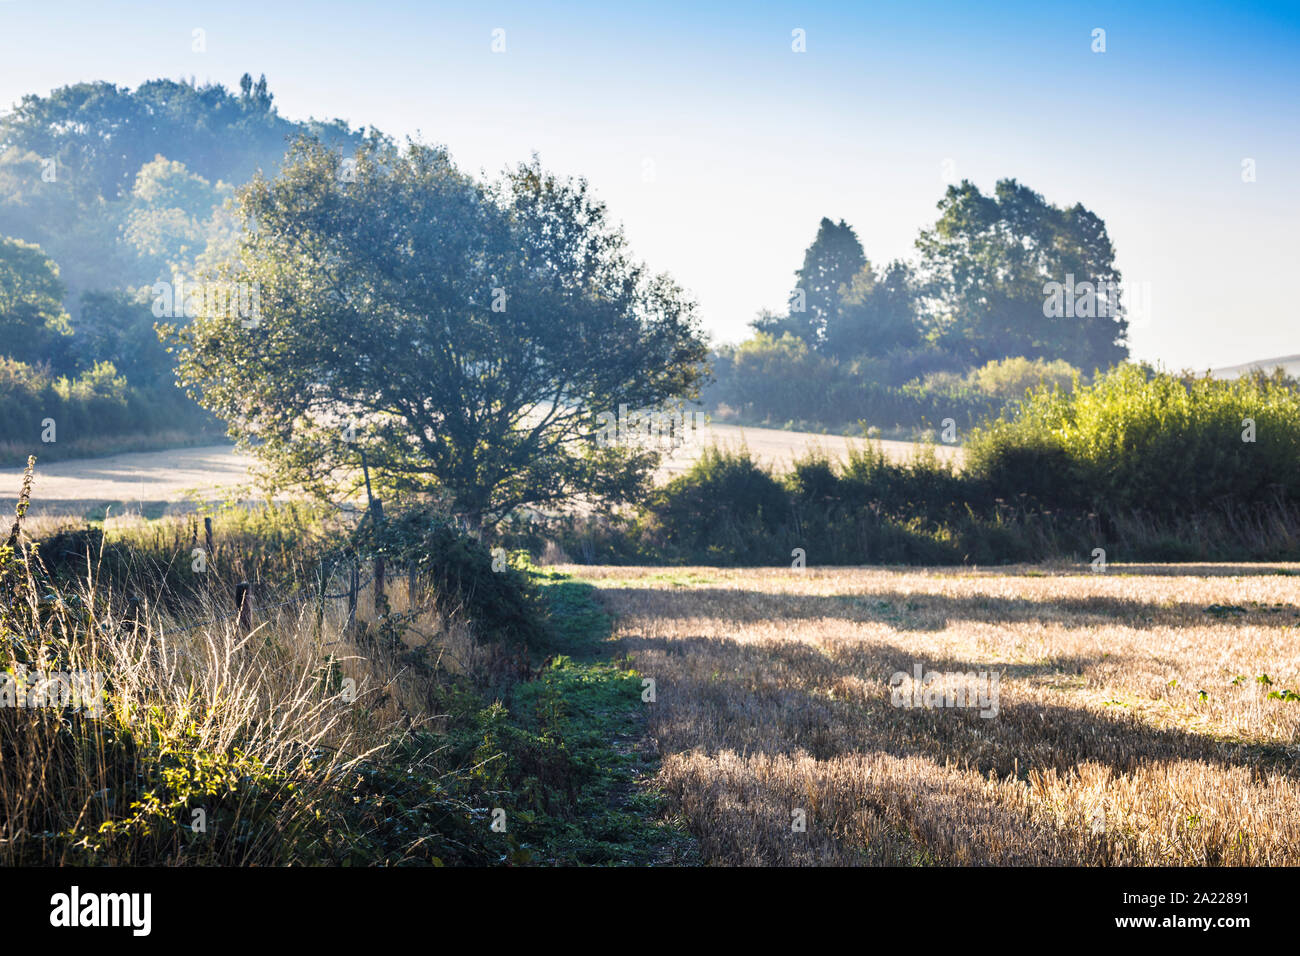 The view towards Liddington Hill near Swindon, Wiltshire on an early autumn morning. Stock Photo